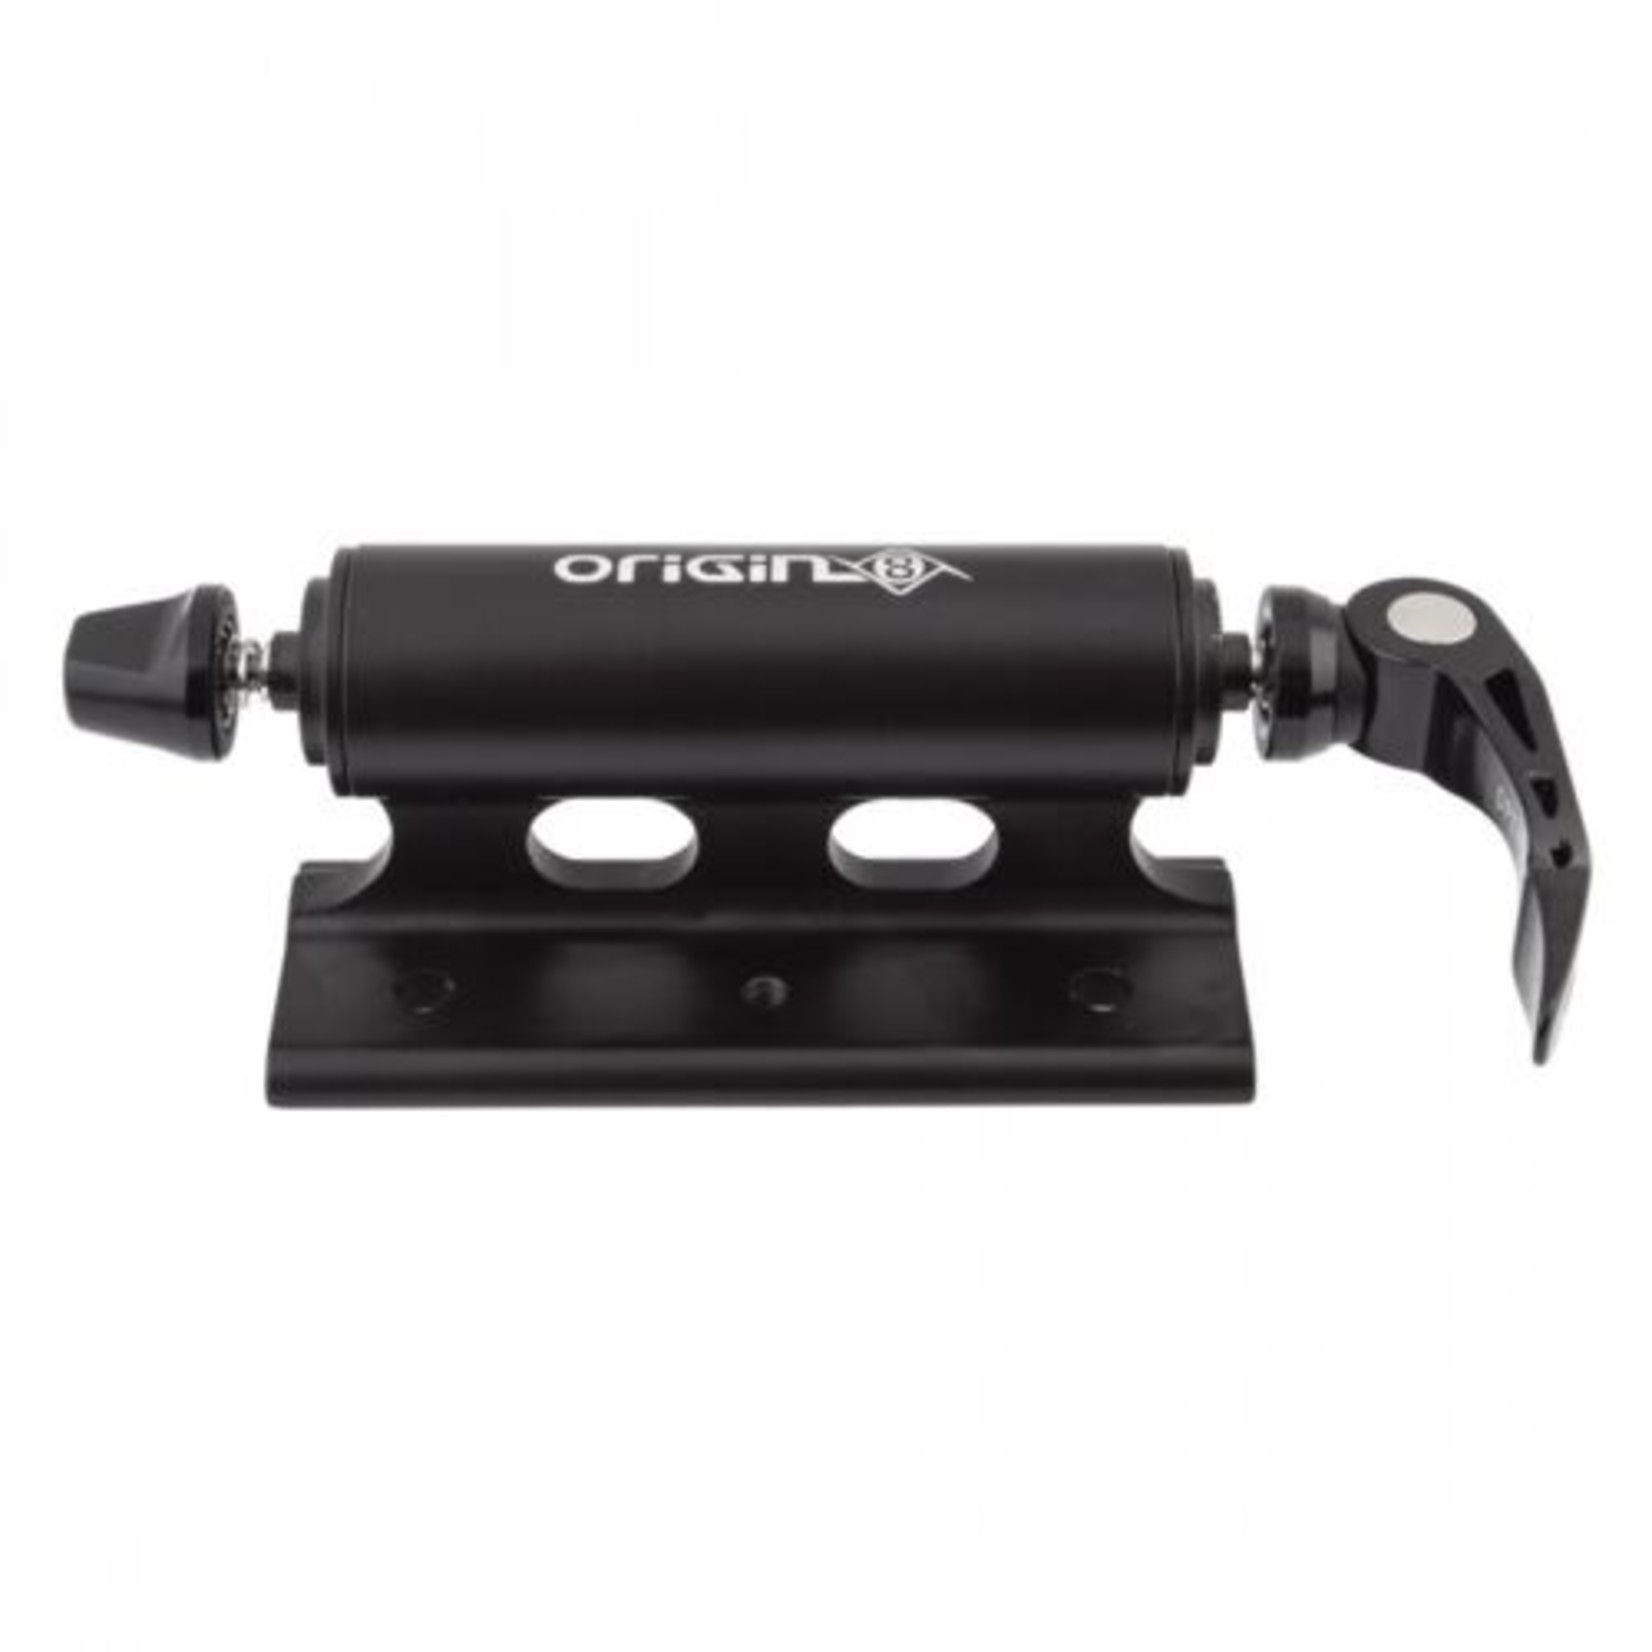 Origin8 Car Rack OR8 Block f/PU F-STD QR/15/20mm Incl Adaptors